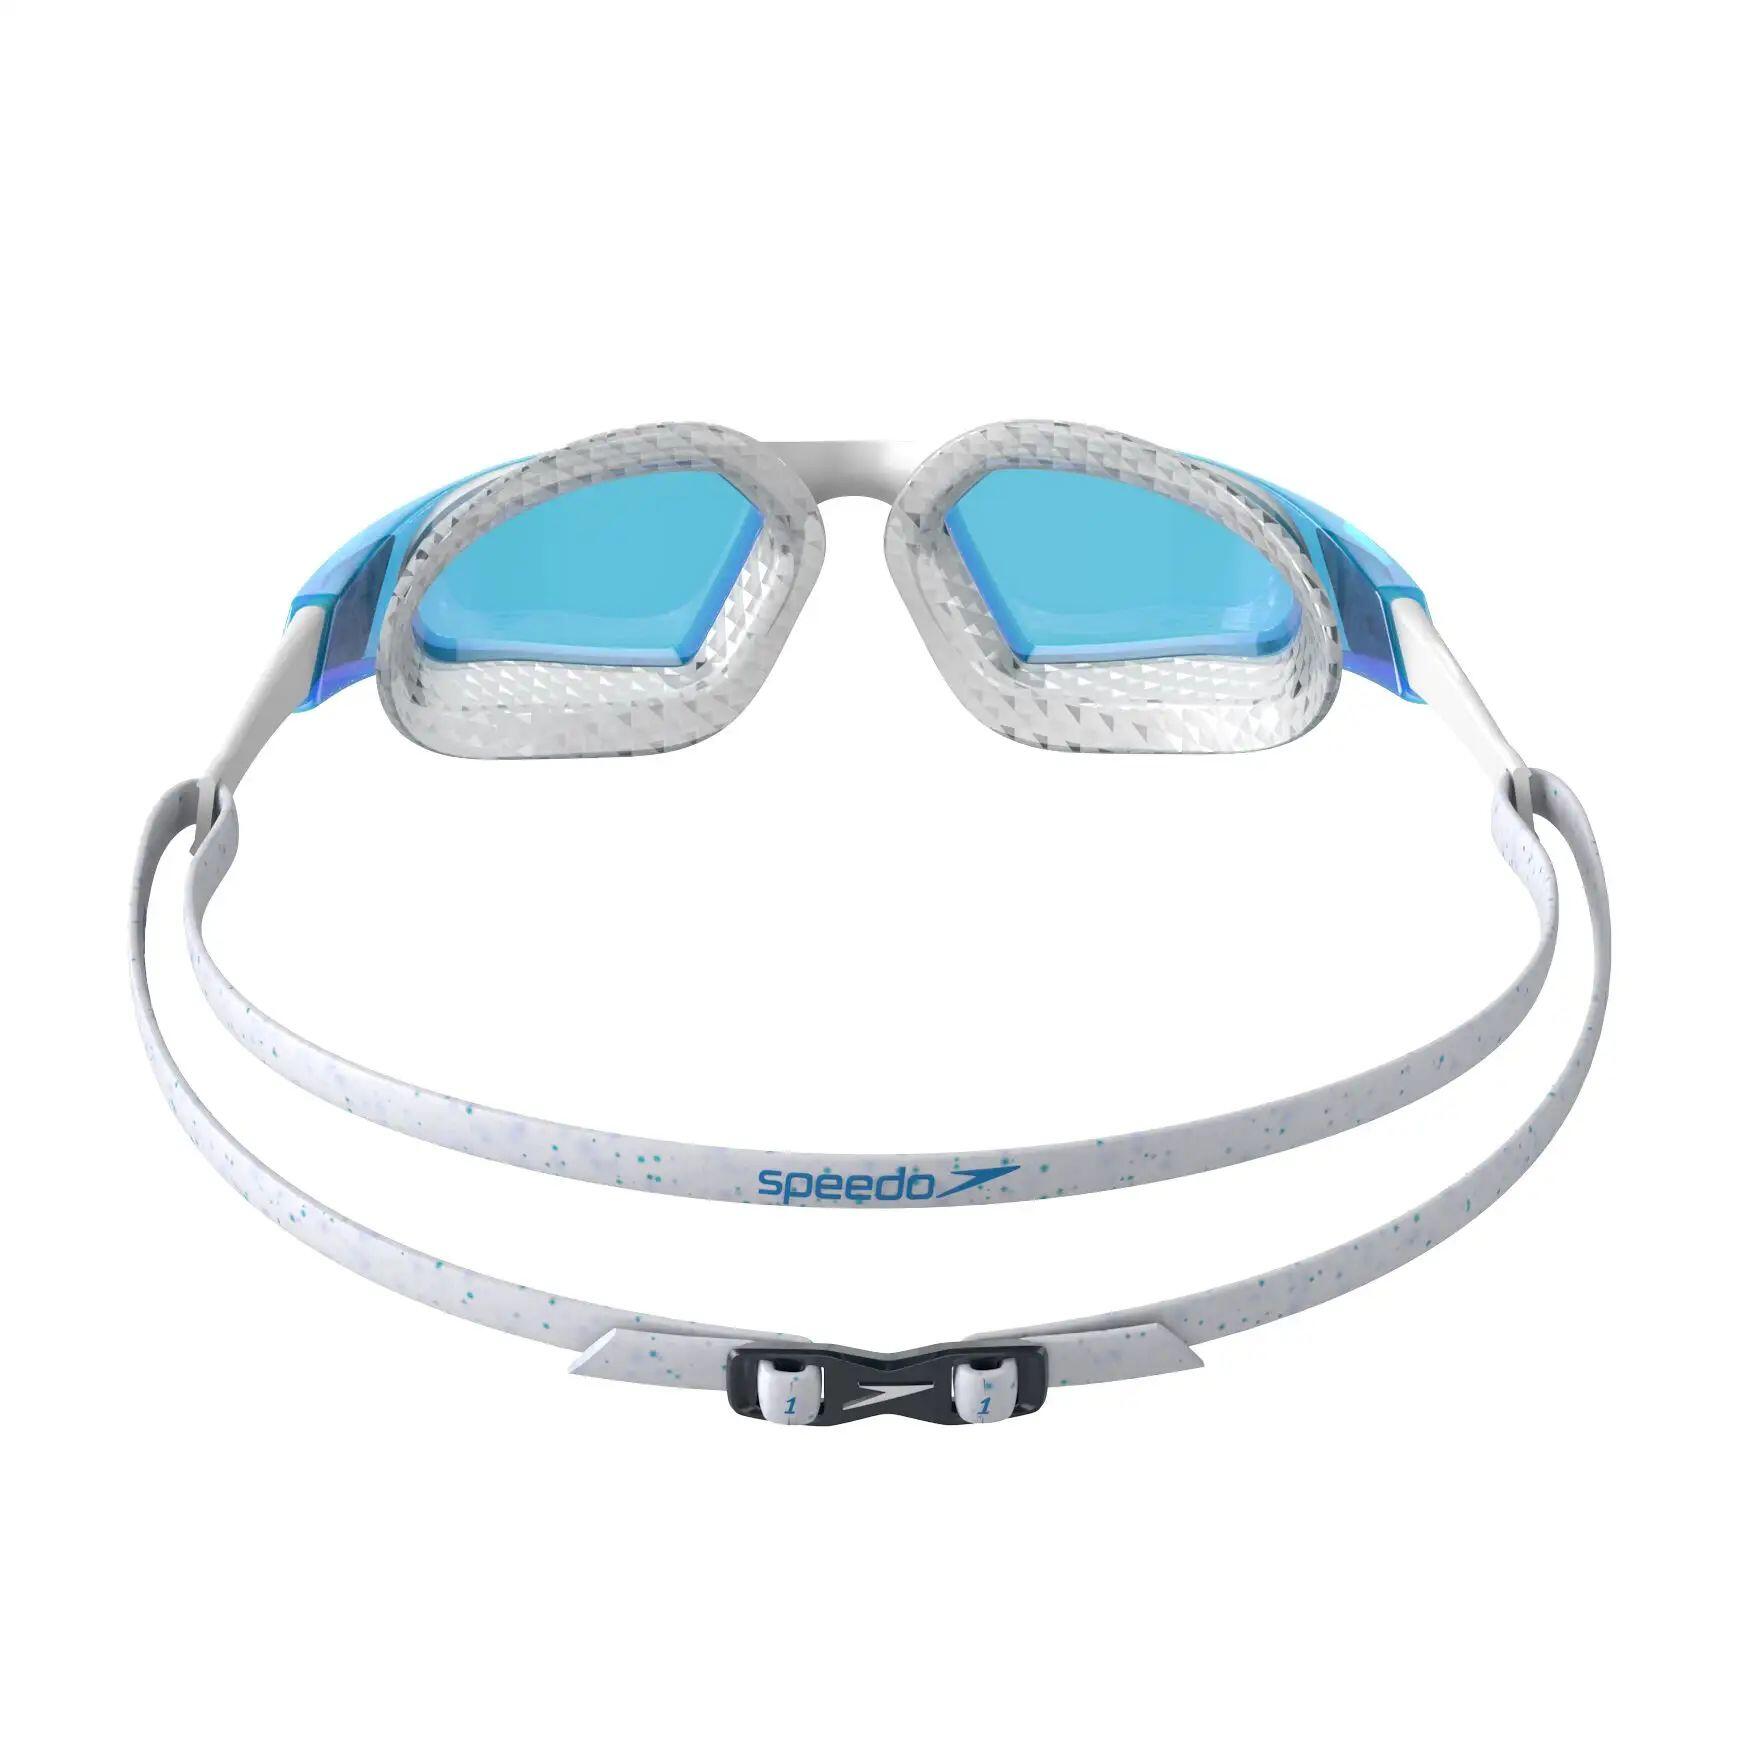 Speedo Aquapulse Pro Goggles - White / Blue 4/4